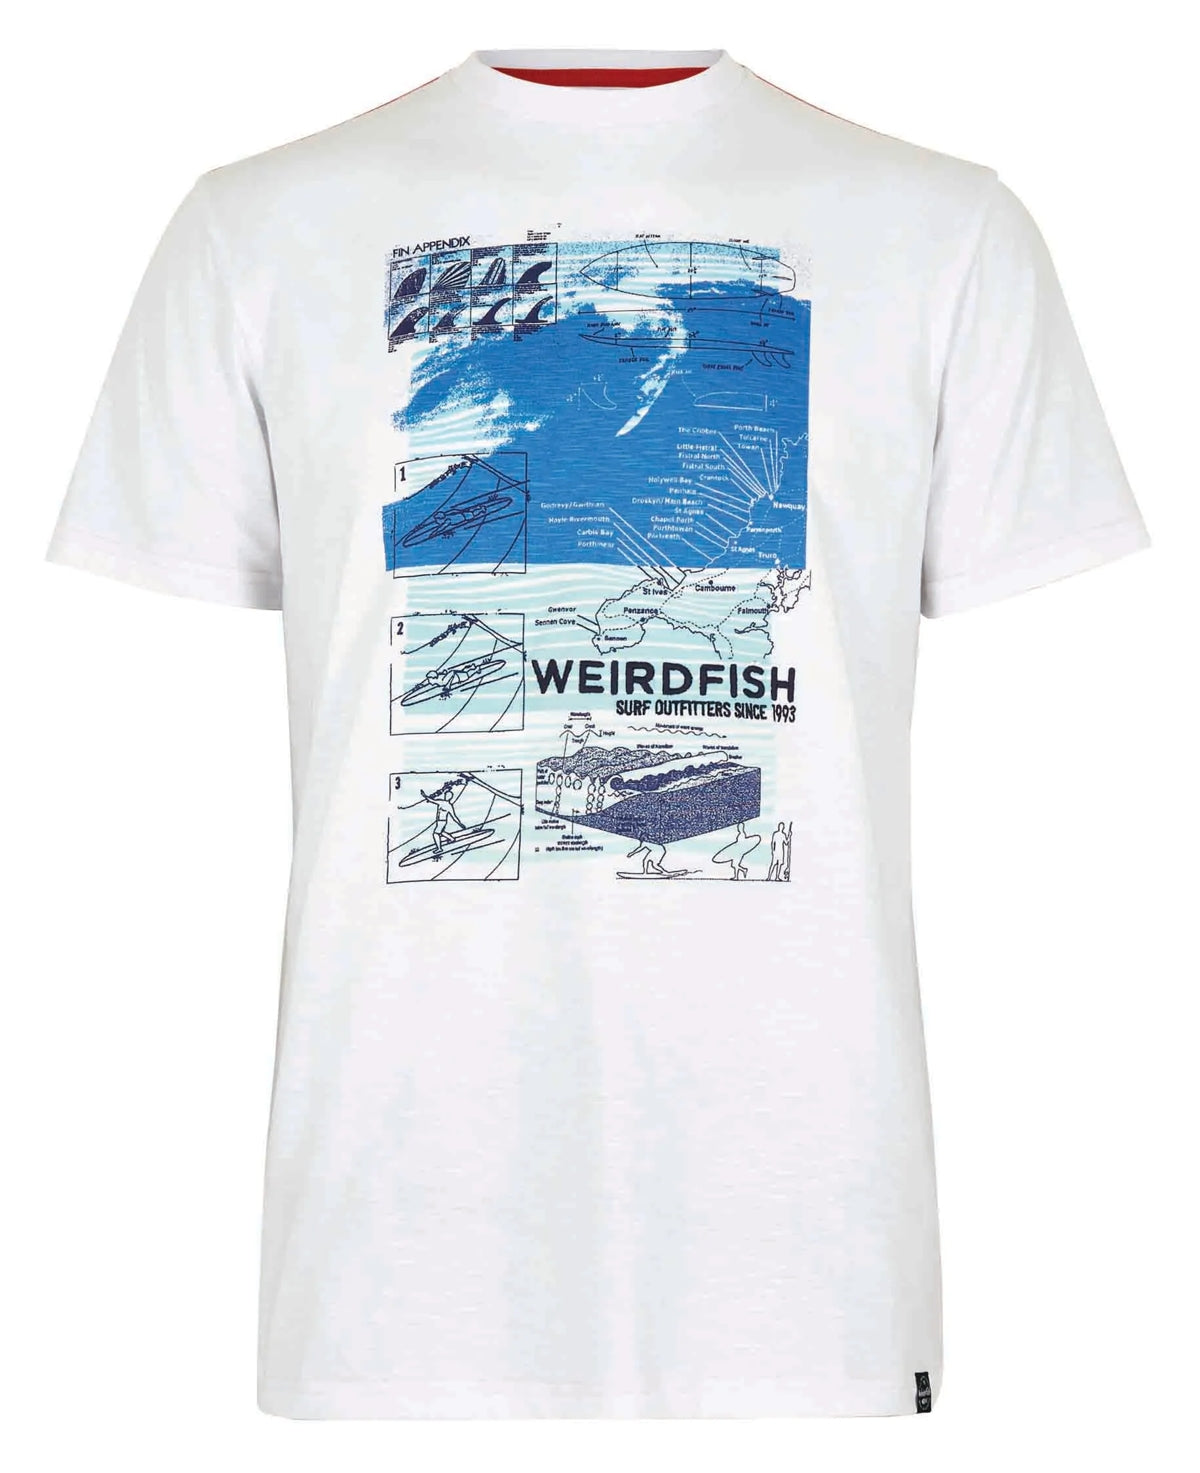 Weird Fish men's Fin print t-shirt in White.